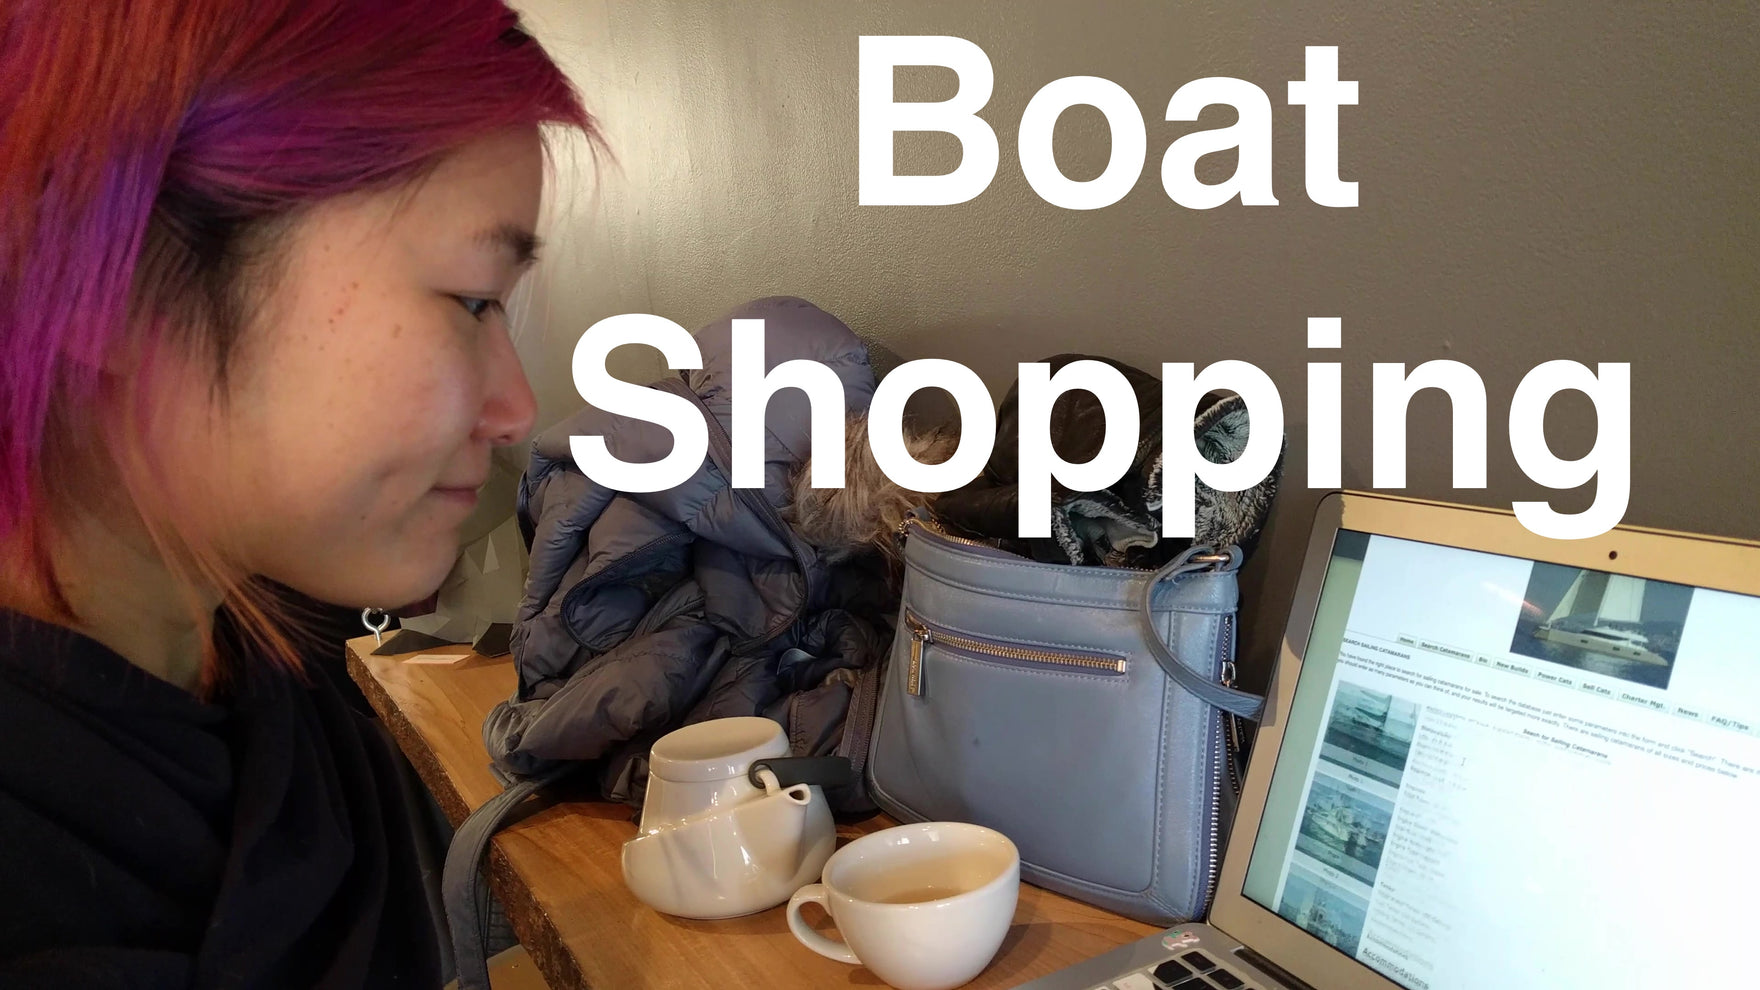 Episode 02 - Boat Shopping